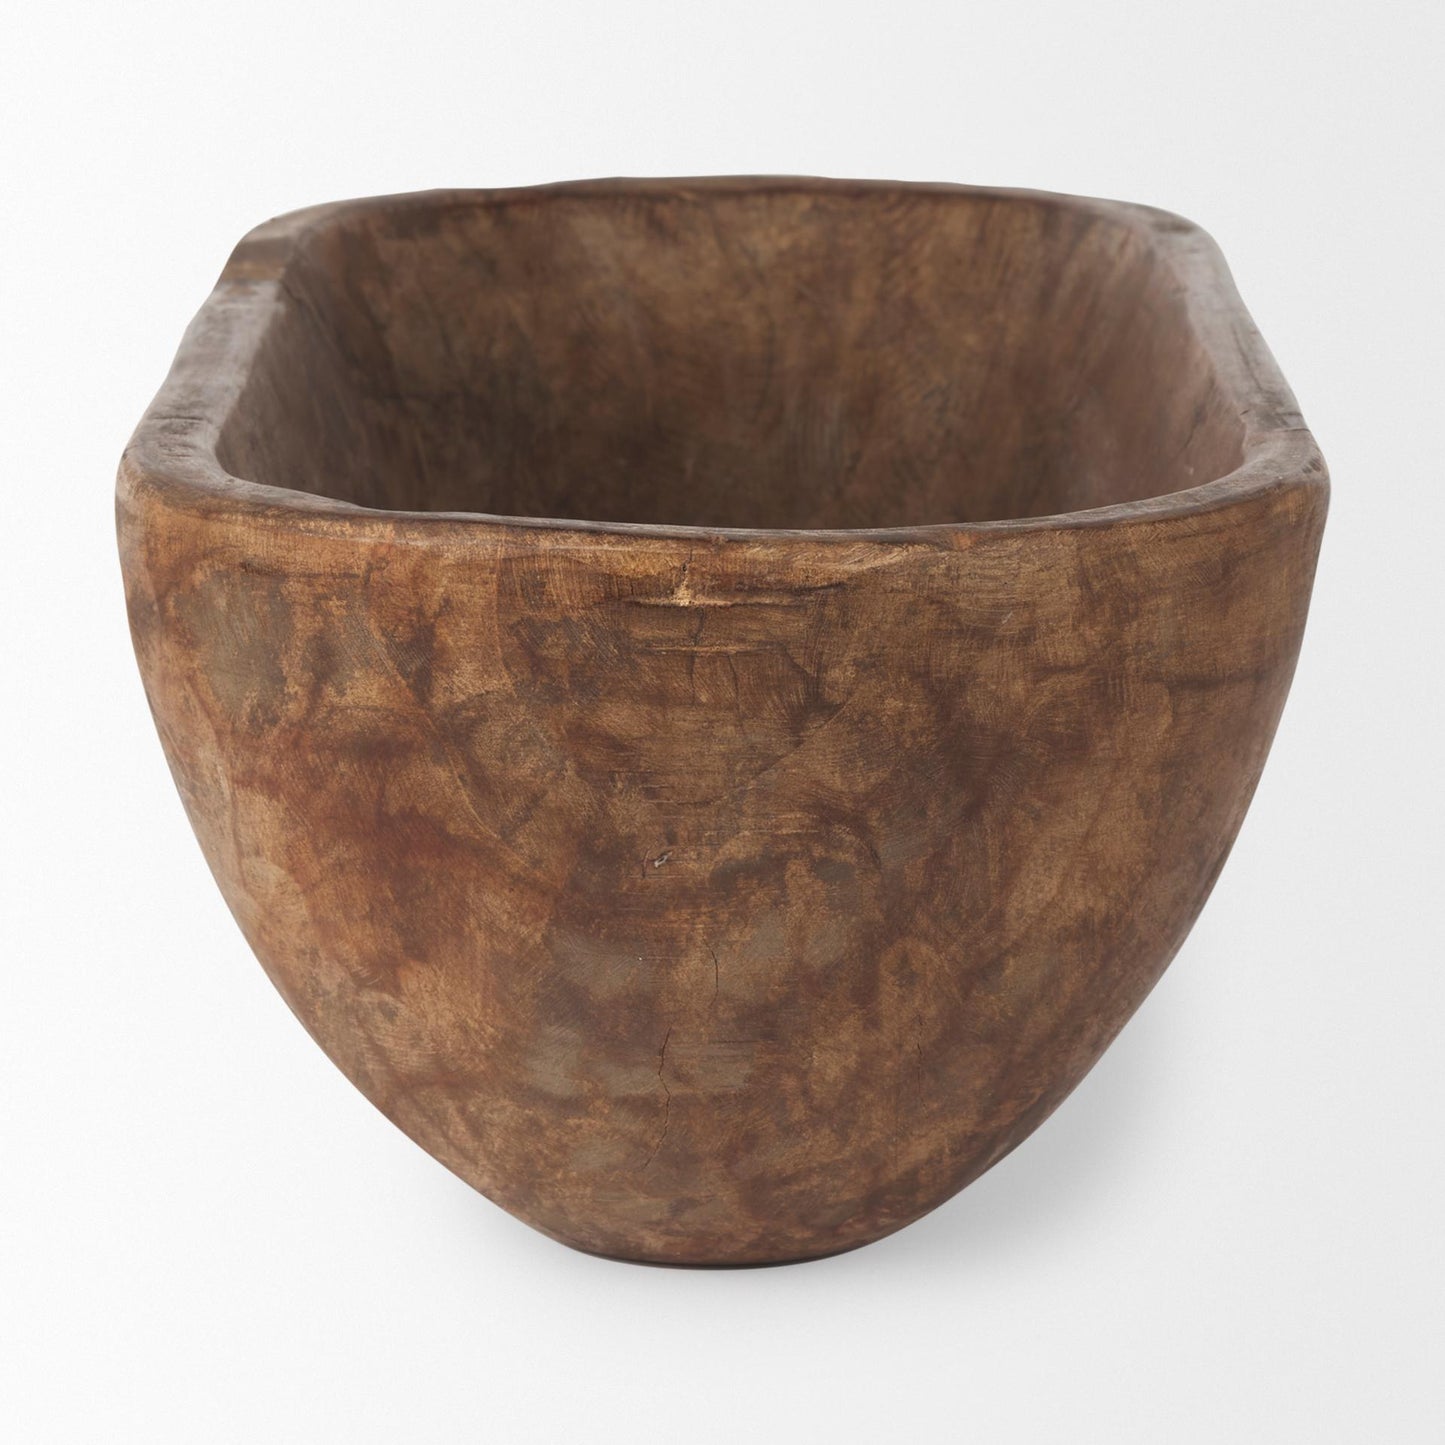 Athena Extra Large Oblong Medium Brown Reclaimed Wood Bowl